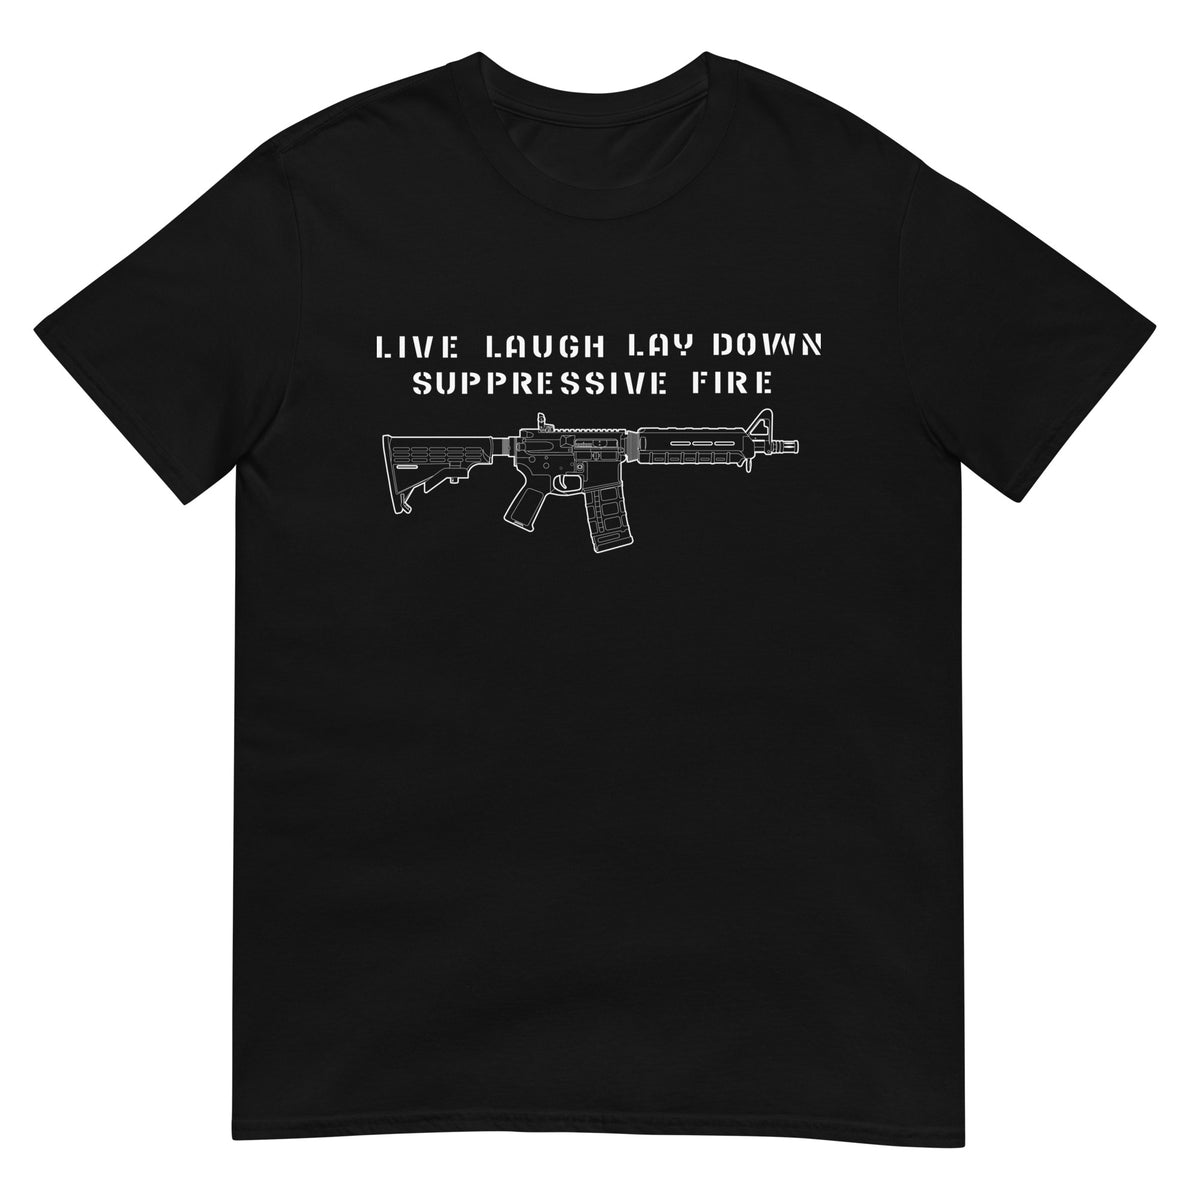 Live Laugh Lay Down Suppressive Fire T-Shirt